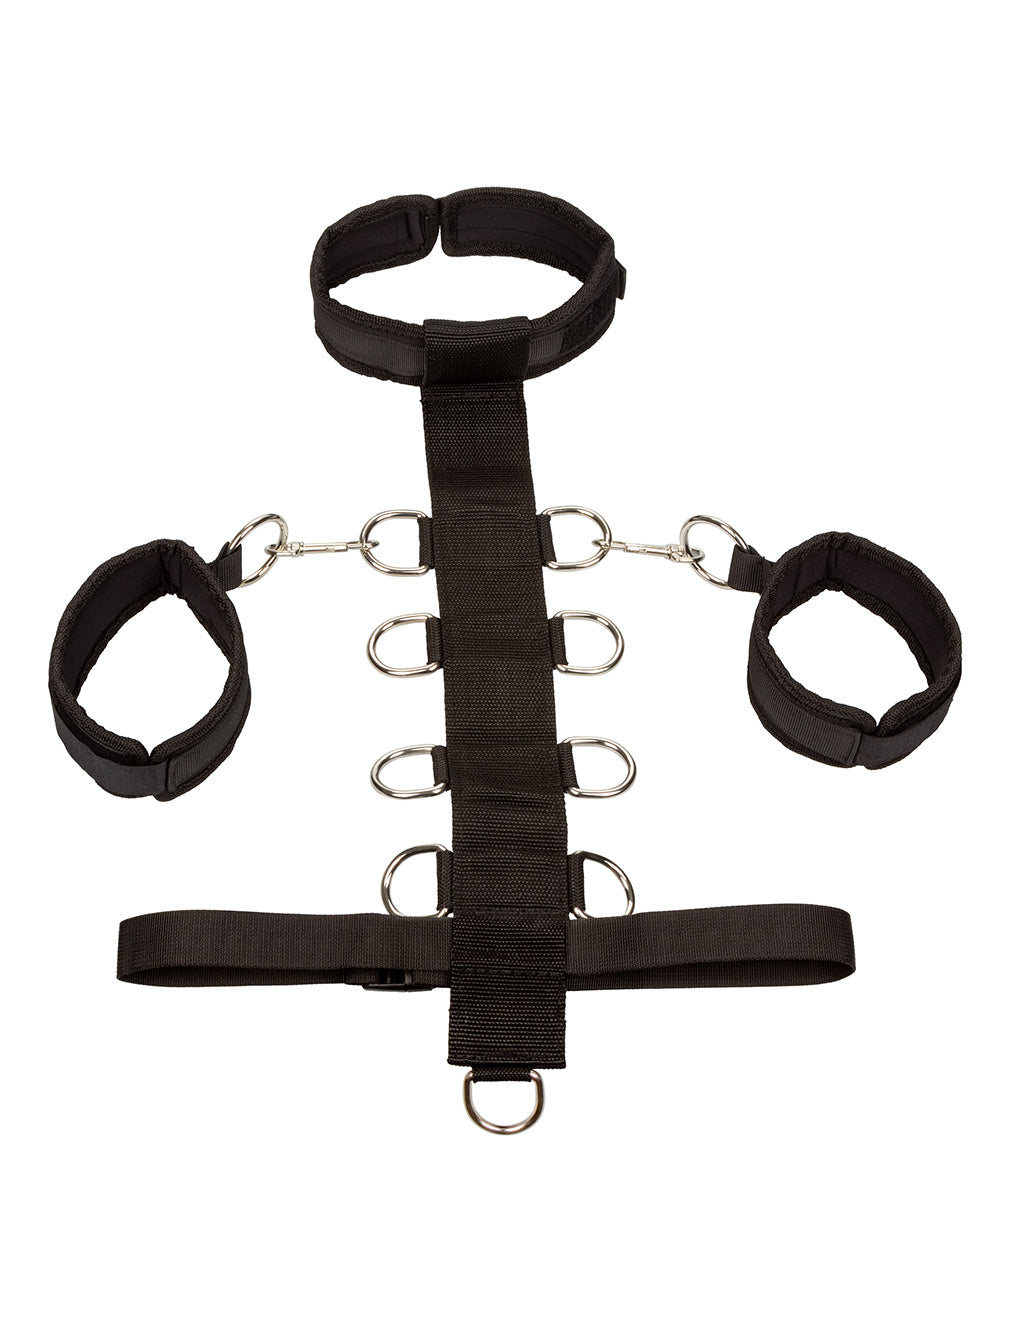 Hustler® 3 Piece Collar and Body Restraint Set- Contents